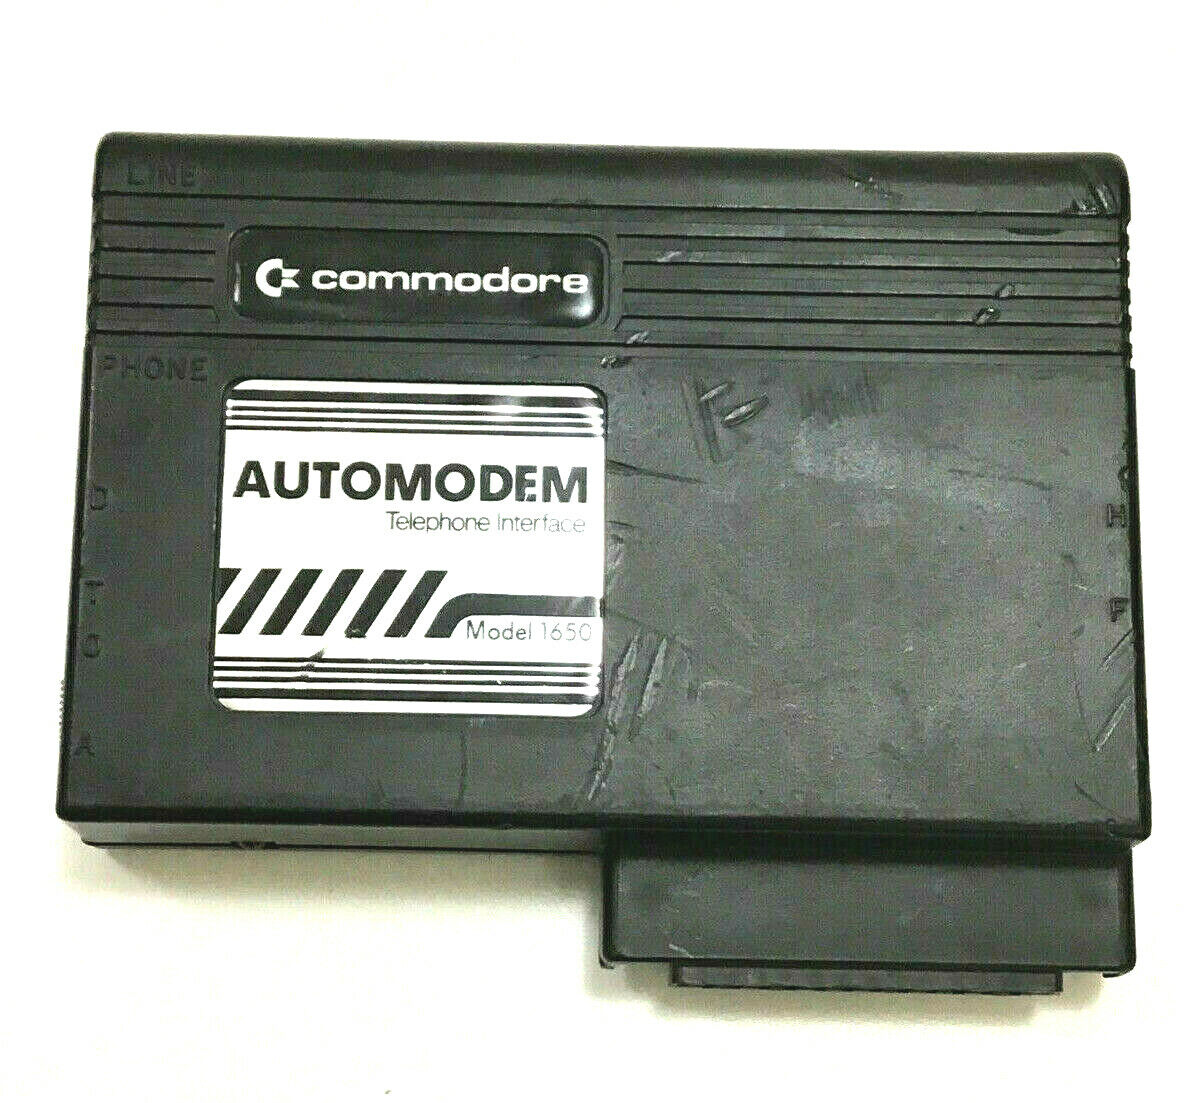 Genuine Commodore Automodem Telephone Interface (Model 1650)